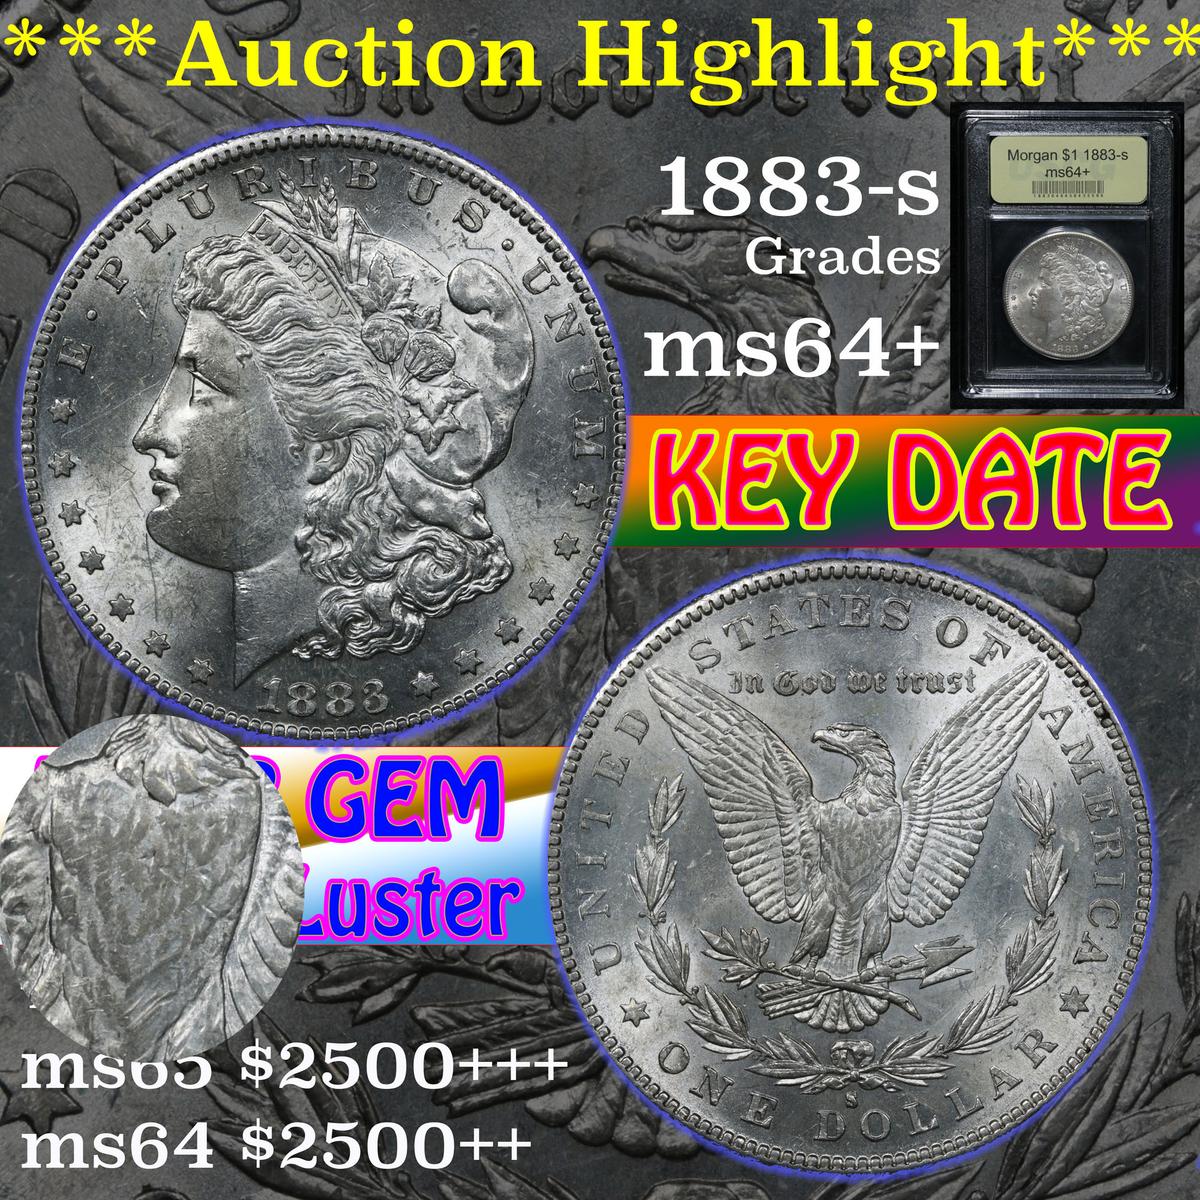 ***Auction Highlight*** 1883-s Morgan Dollar $1 Graded Choice+ Unc By USCG (fc)